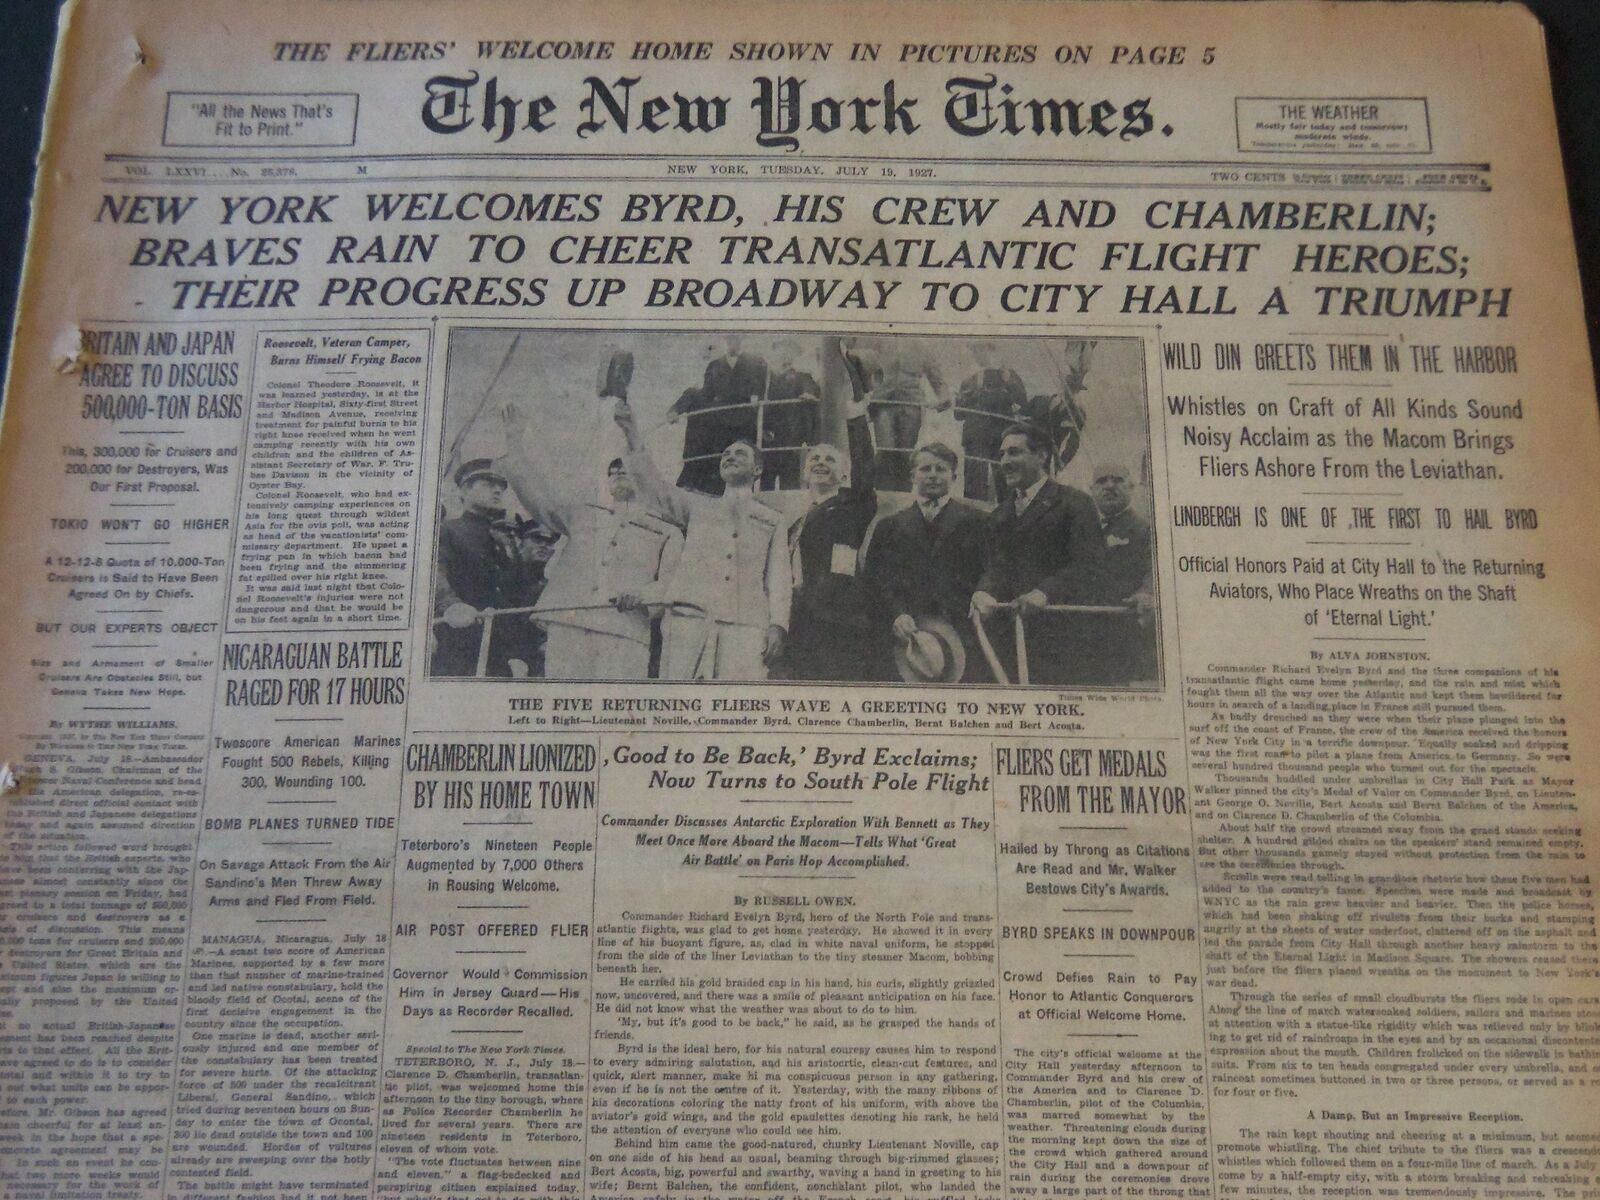 1927 JULY 19 NEW YORK TIMES - NEW YORK WELCOMES BYRD, CREW CHAMBERLAIN - NT 6477